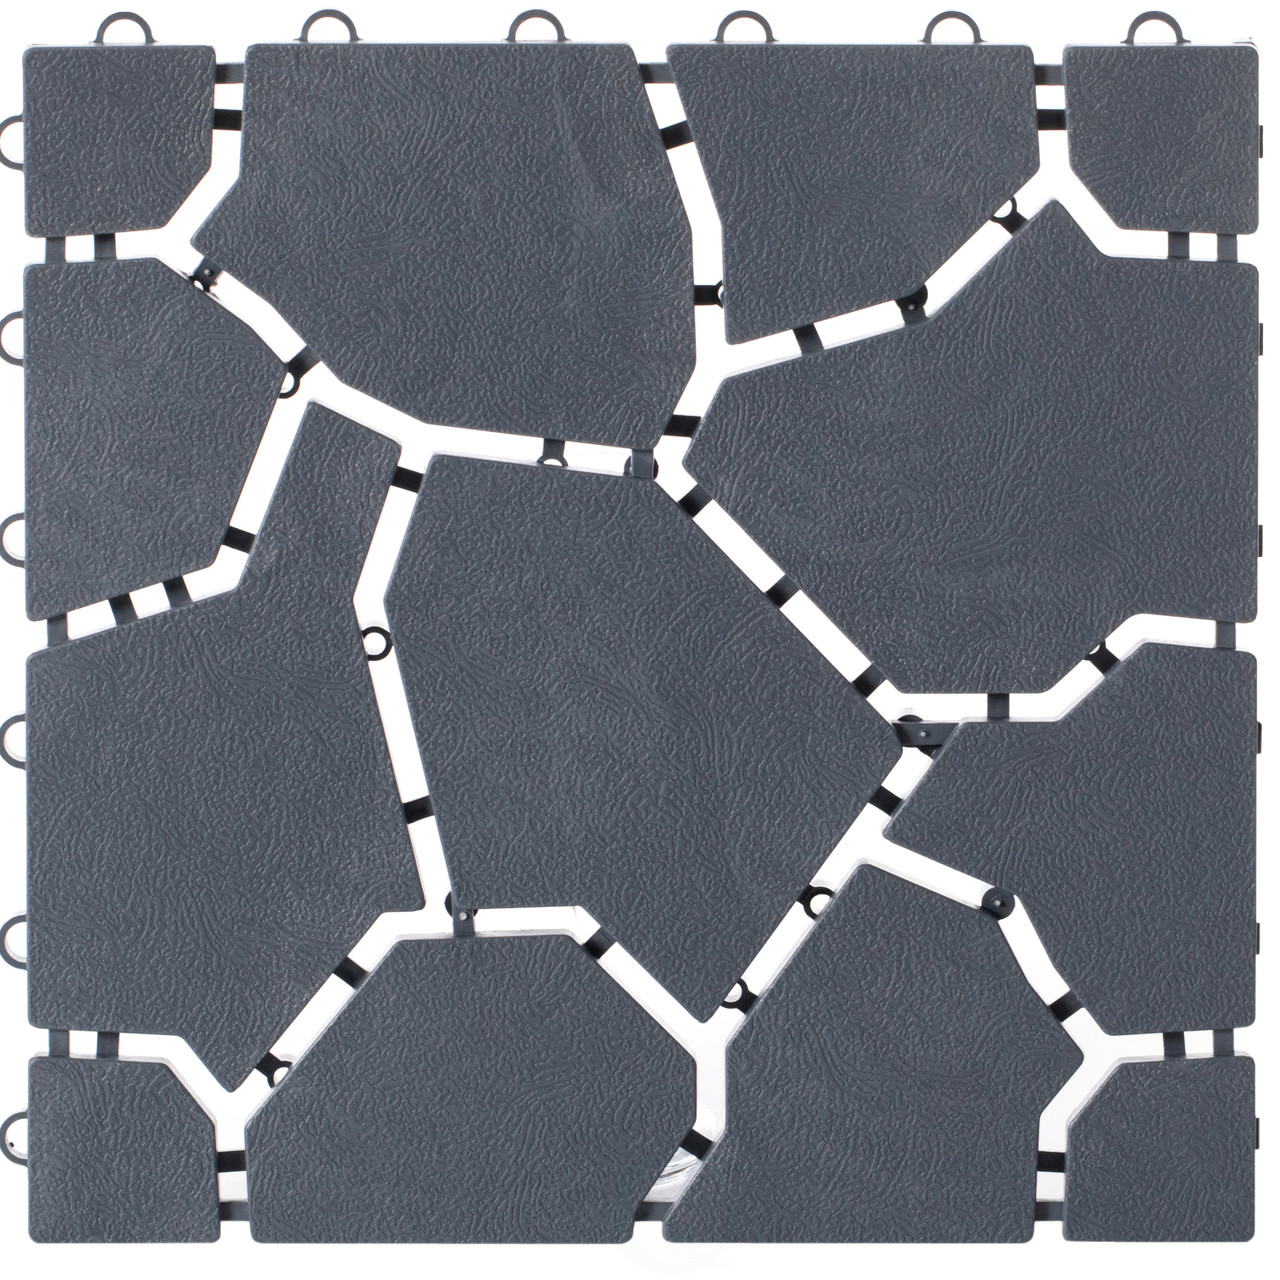 Buy Wholesale QI004108.4 Gray Garden Path Track Interlocking Stone Look  Design Pathway Tile Floor Paver, Pack of